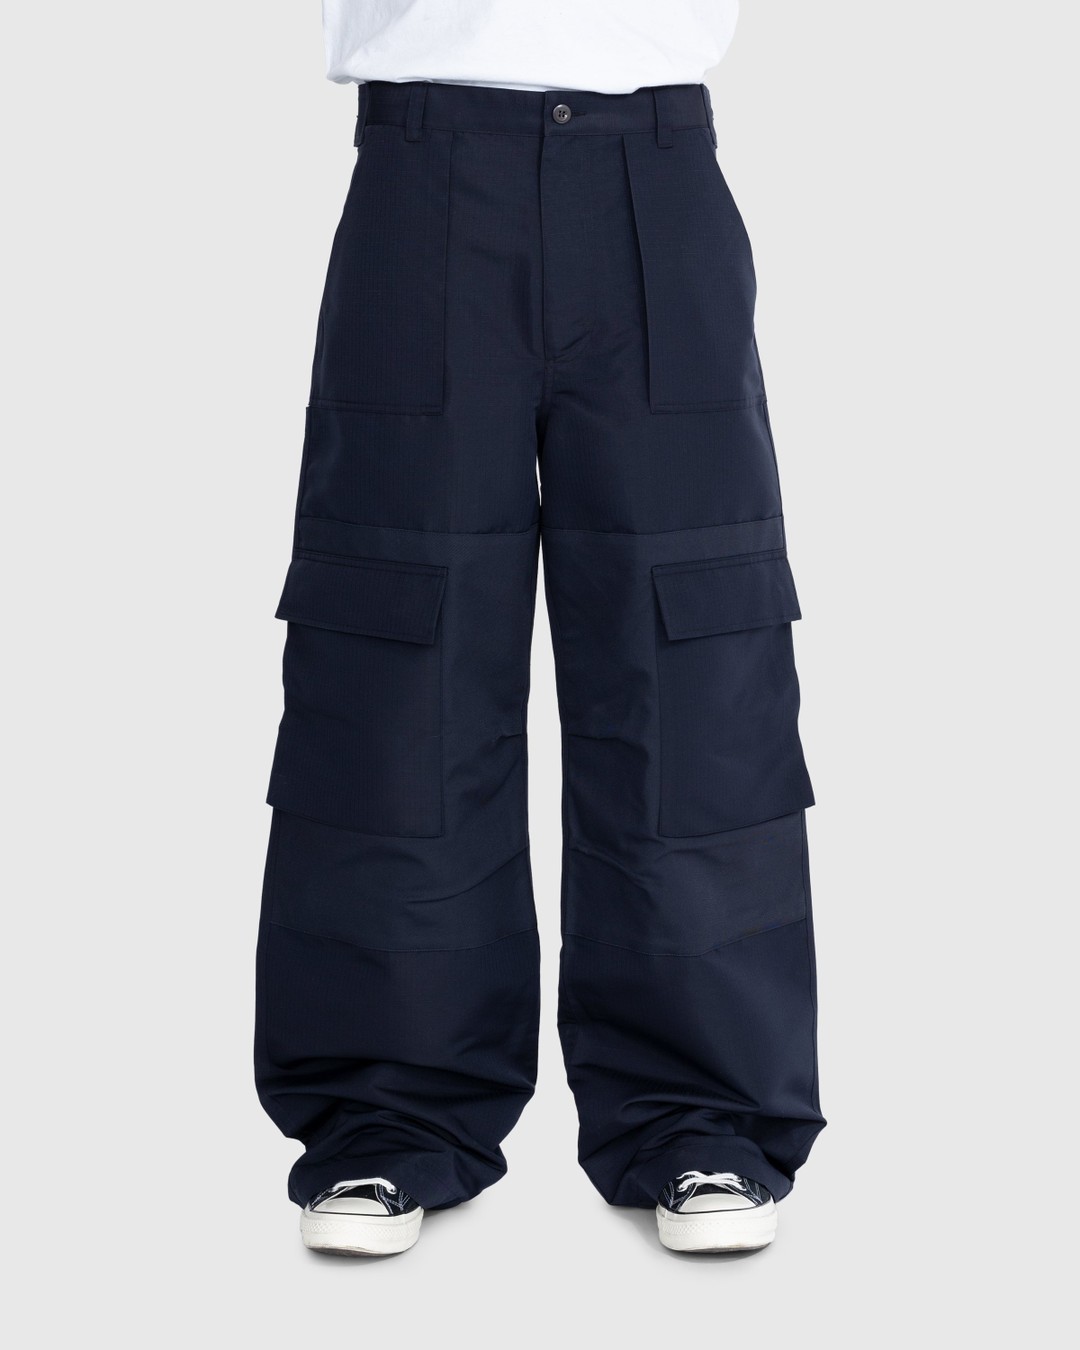 Acne Studios – Ripstop Cargo Trousers Dark Blue - Cargo Pants - Black - Image 2